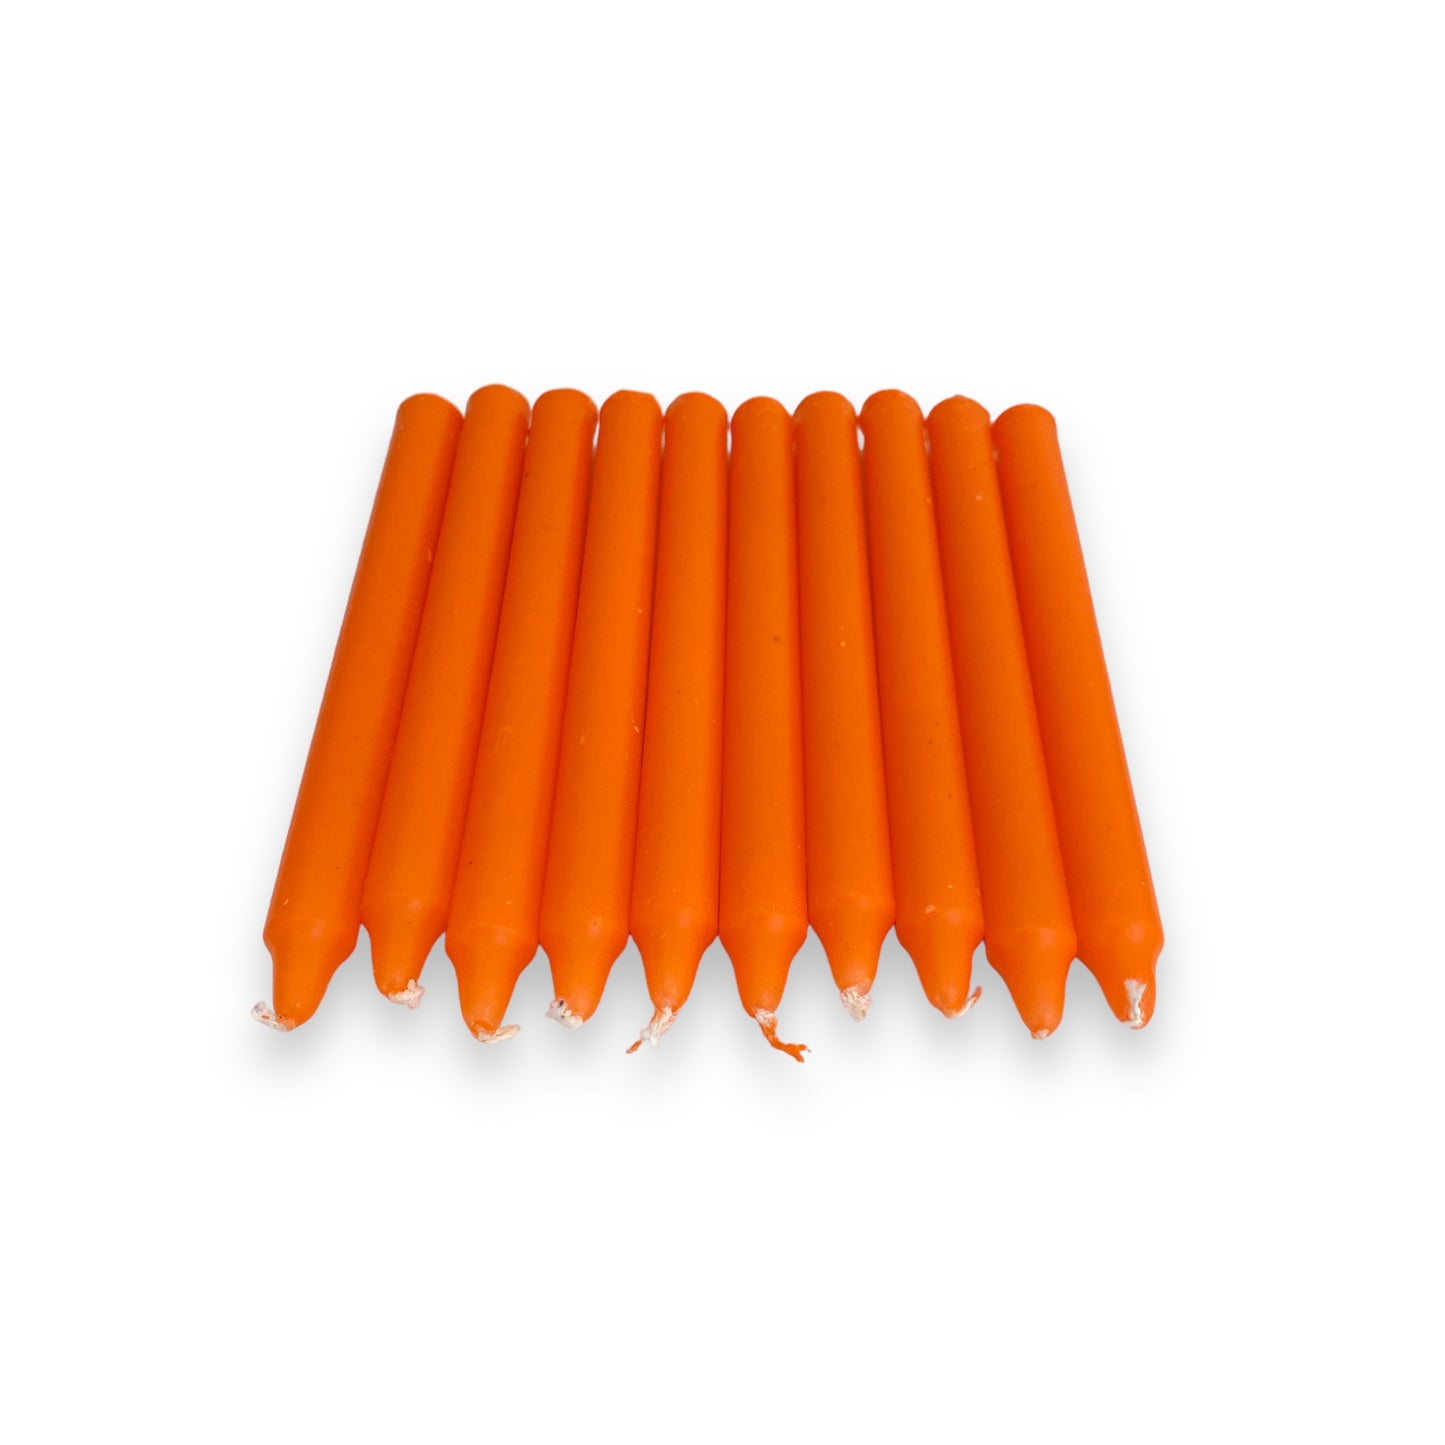 Pack of 10 Orange Candles - 17cm